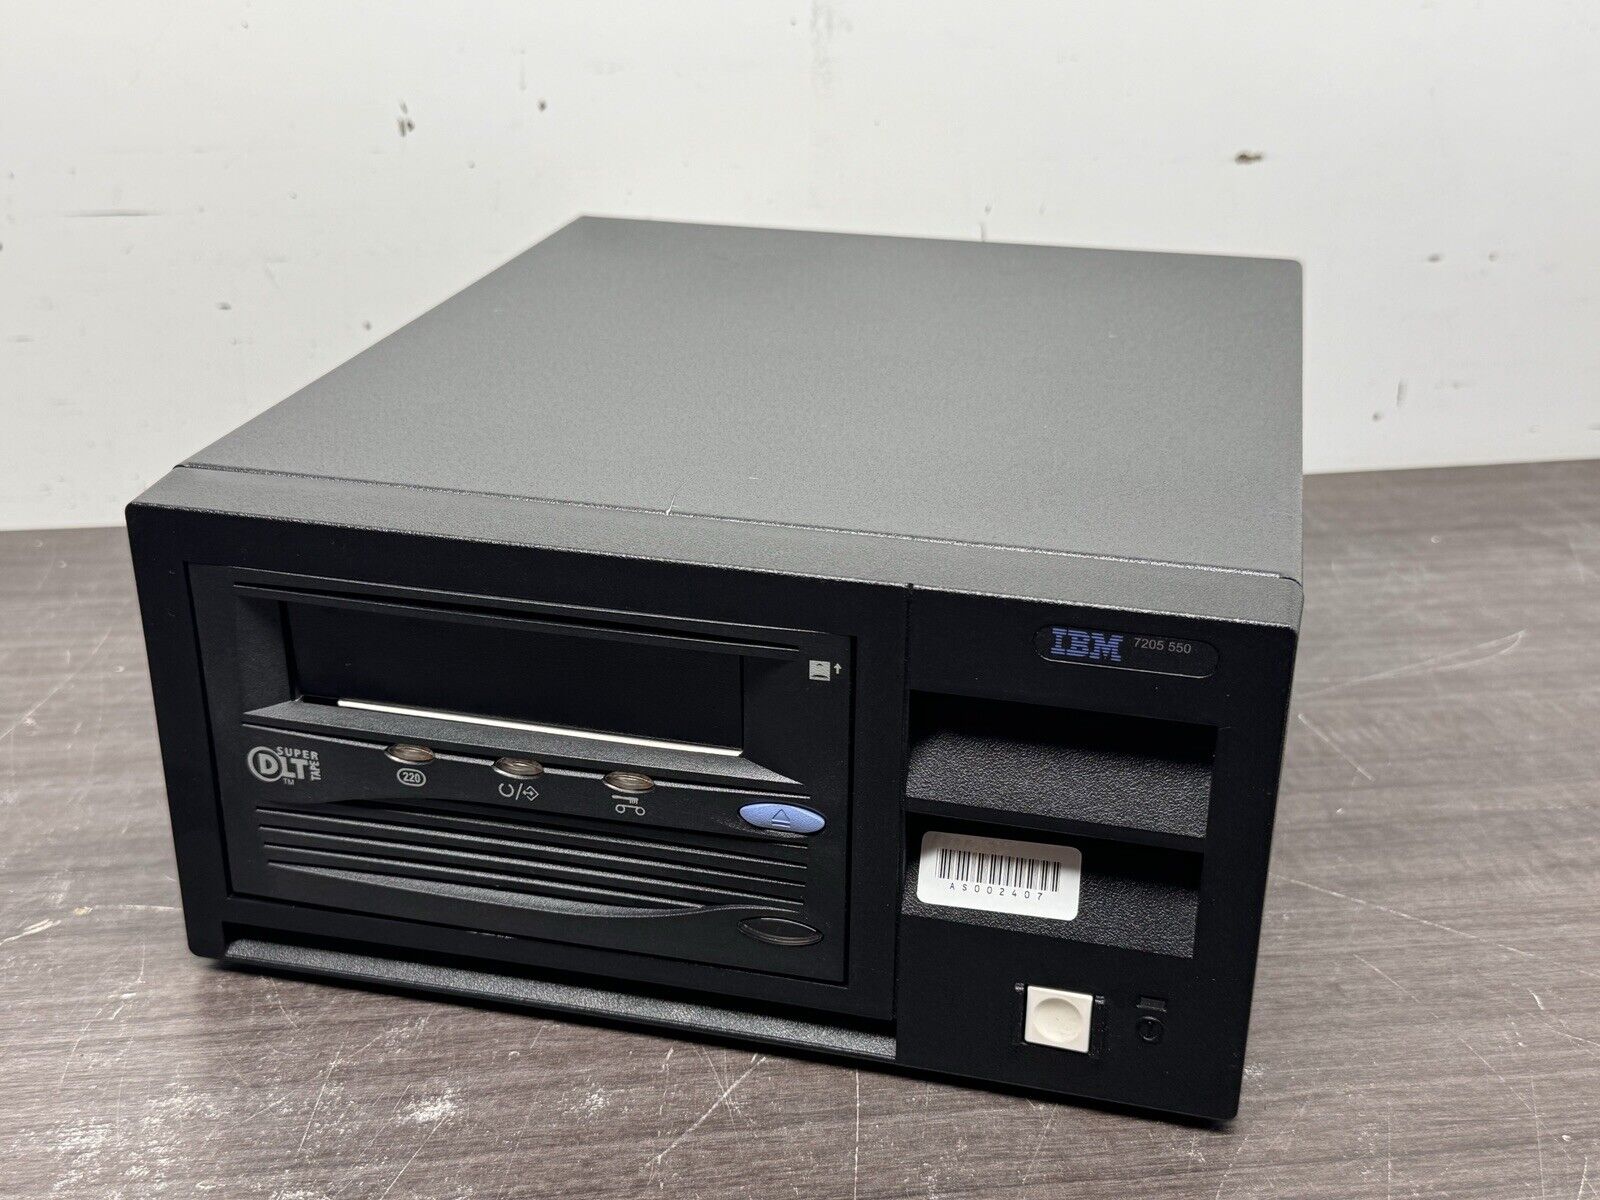 IBM SDLT320 External SCSI Tape Drive 7205-550 - M17